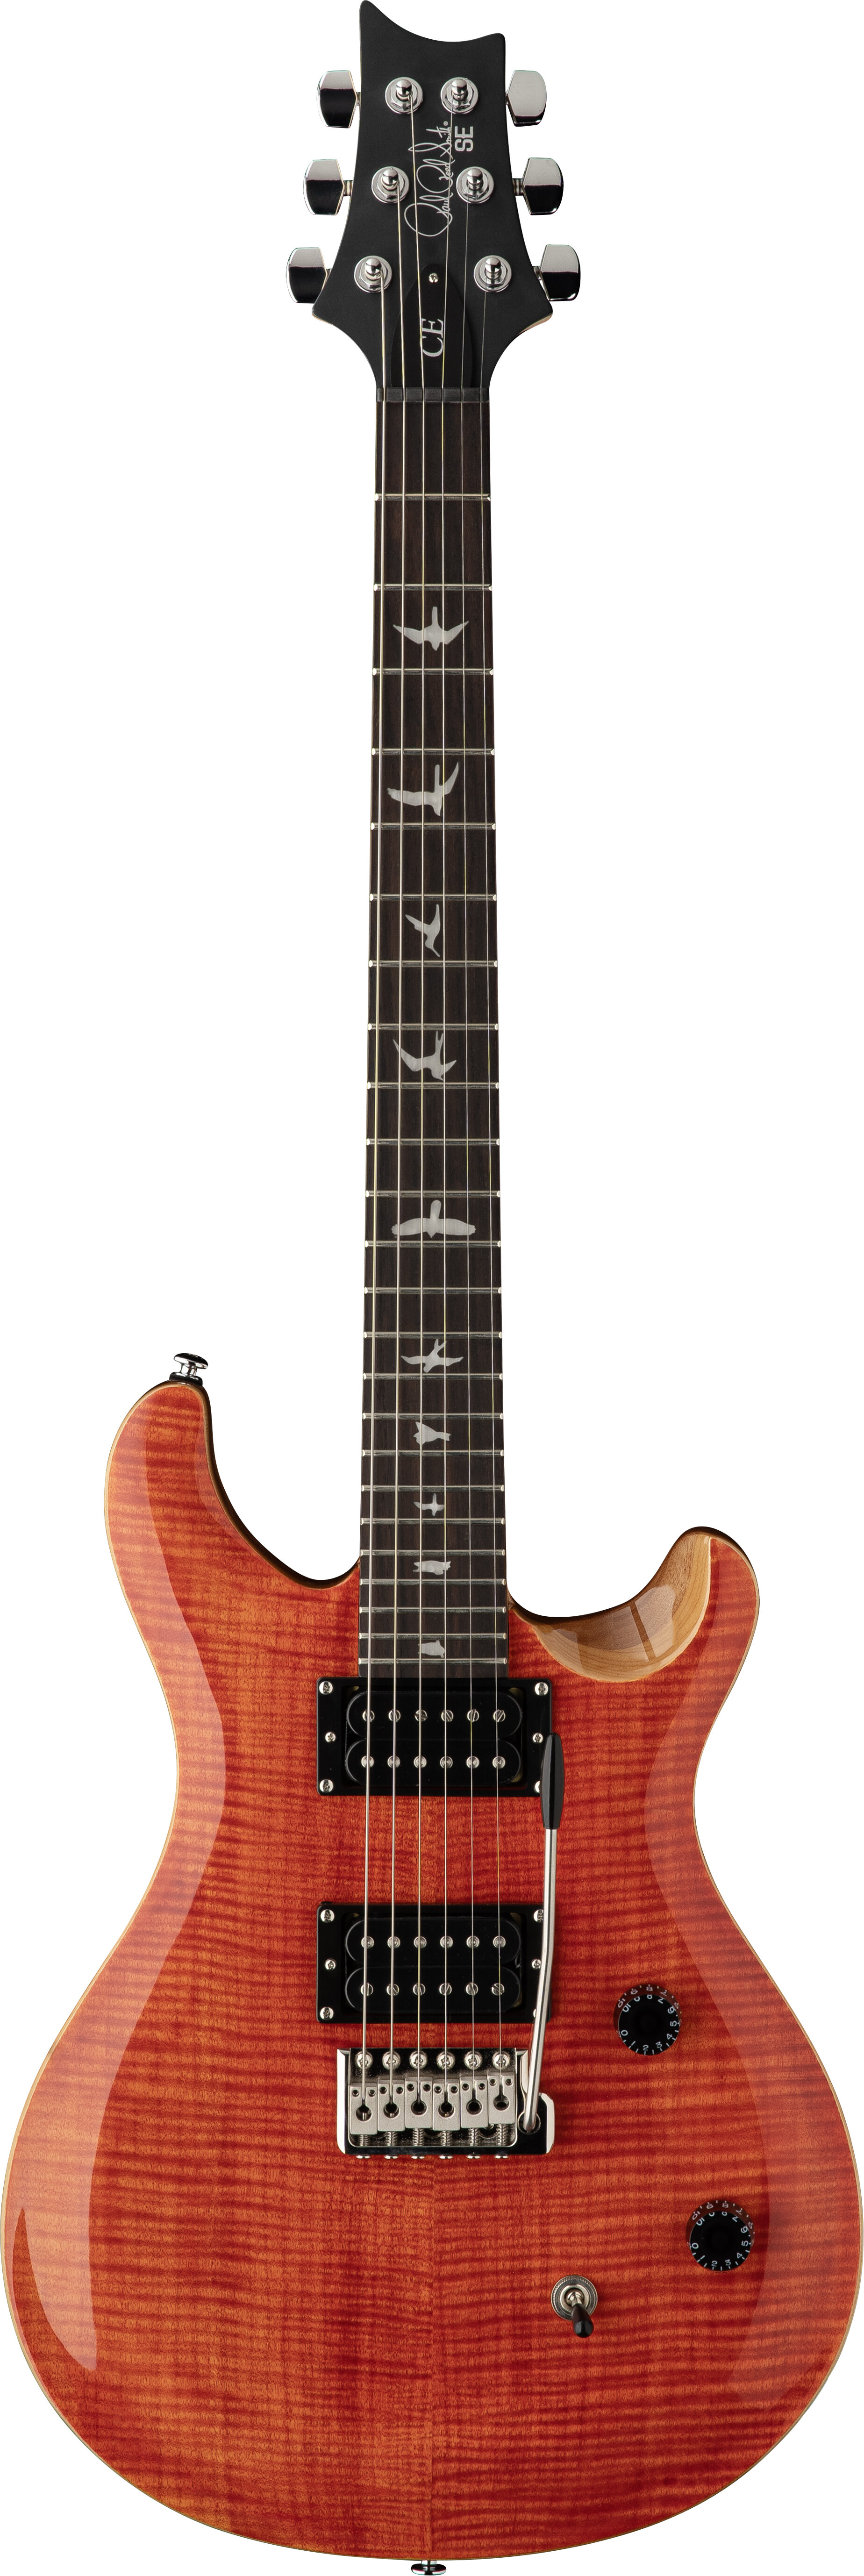 PRS SE CE 24 Electric Guitar Blood Orange -  112888::BR: